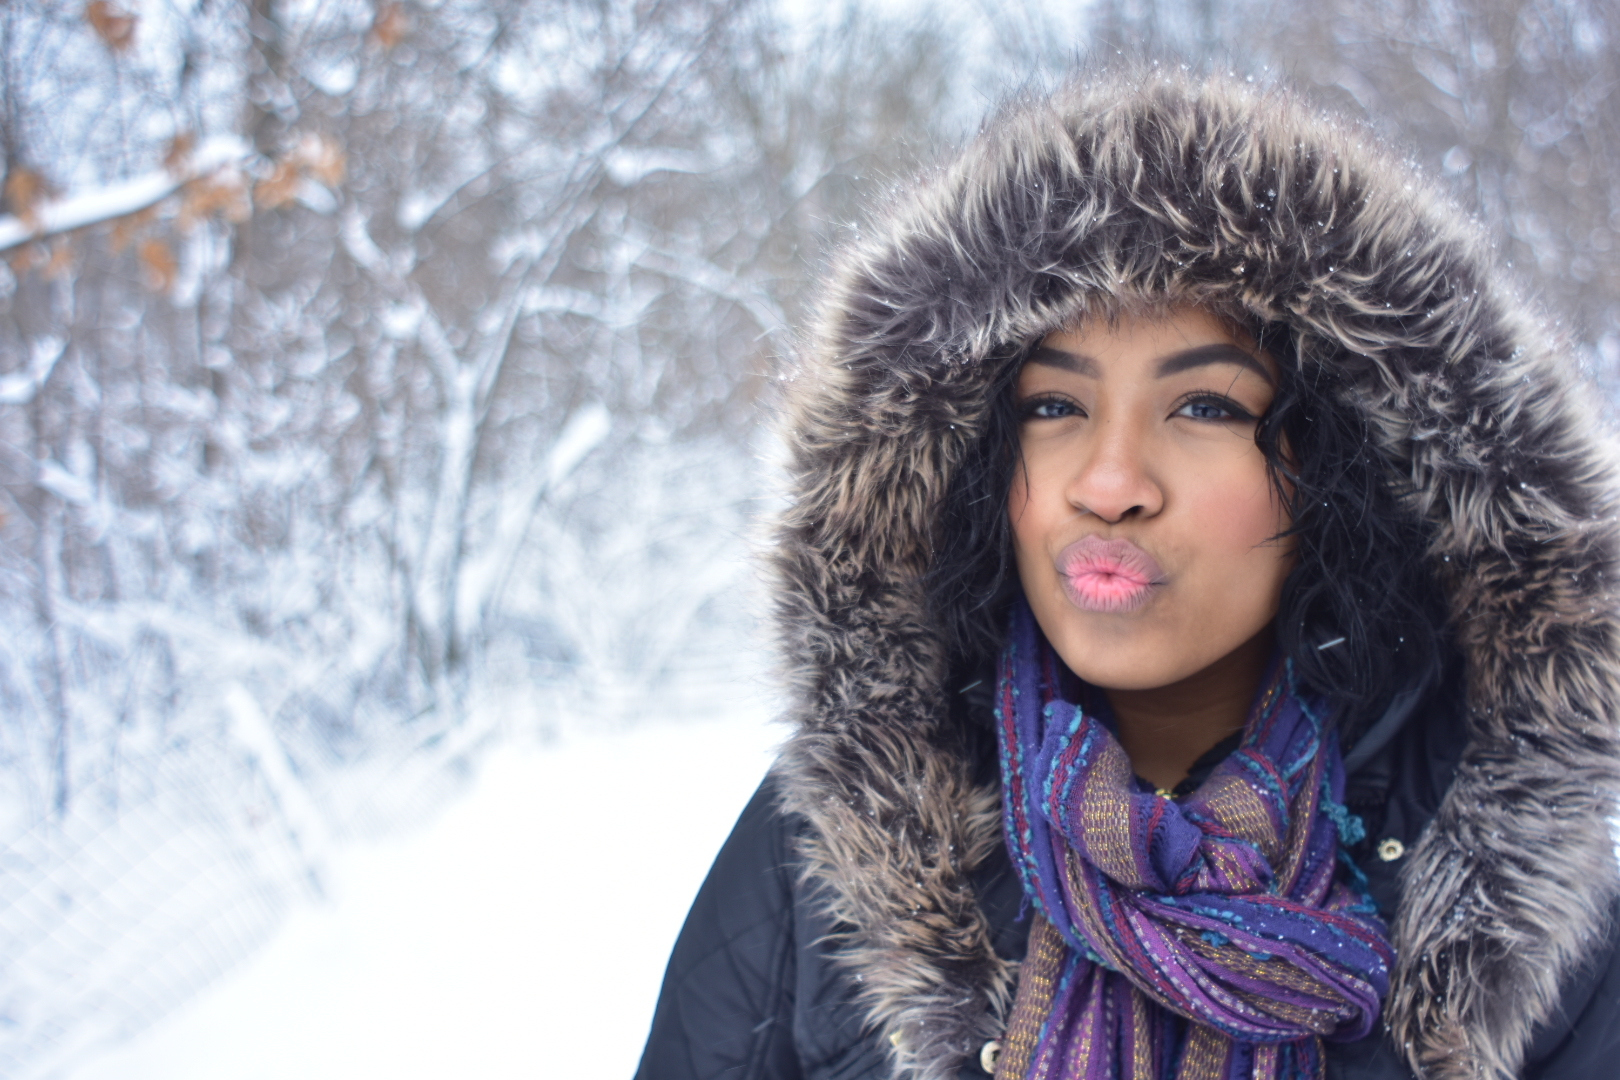 Portrait Of Woman Puckering Lips While Wearing Fur Jacket During Winter Season